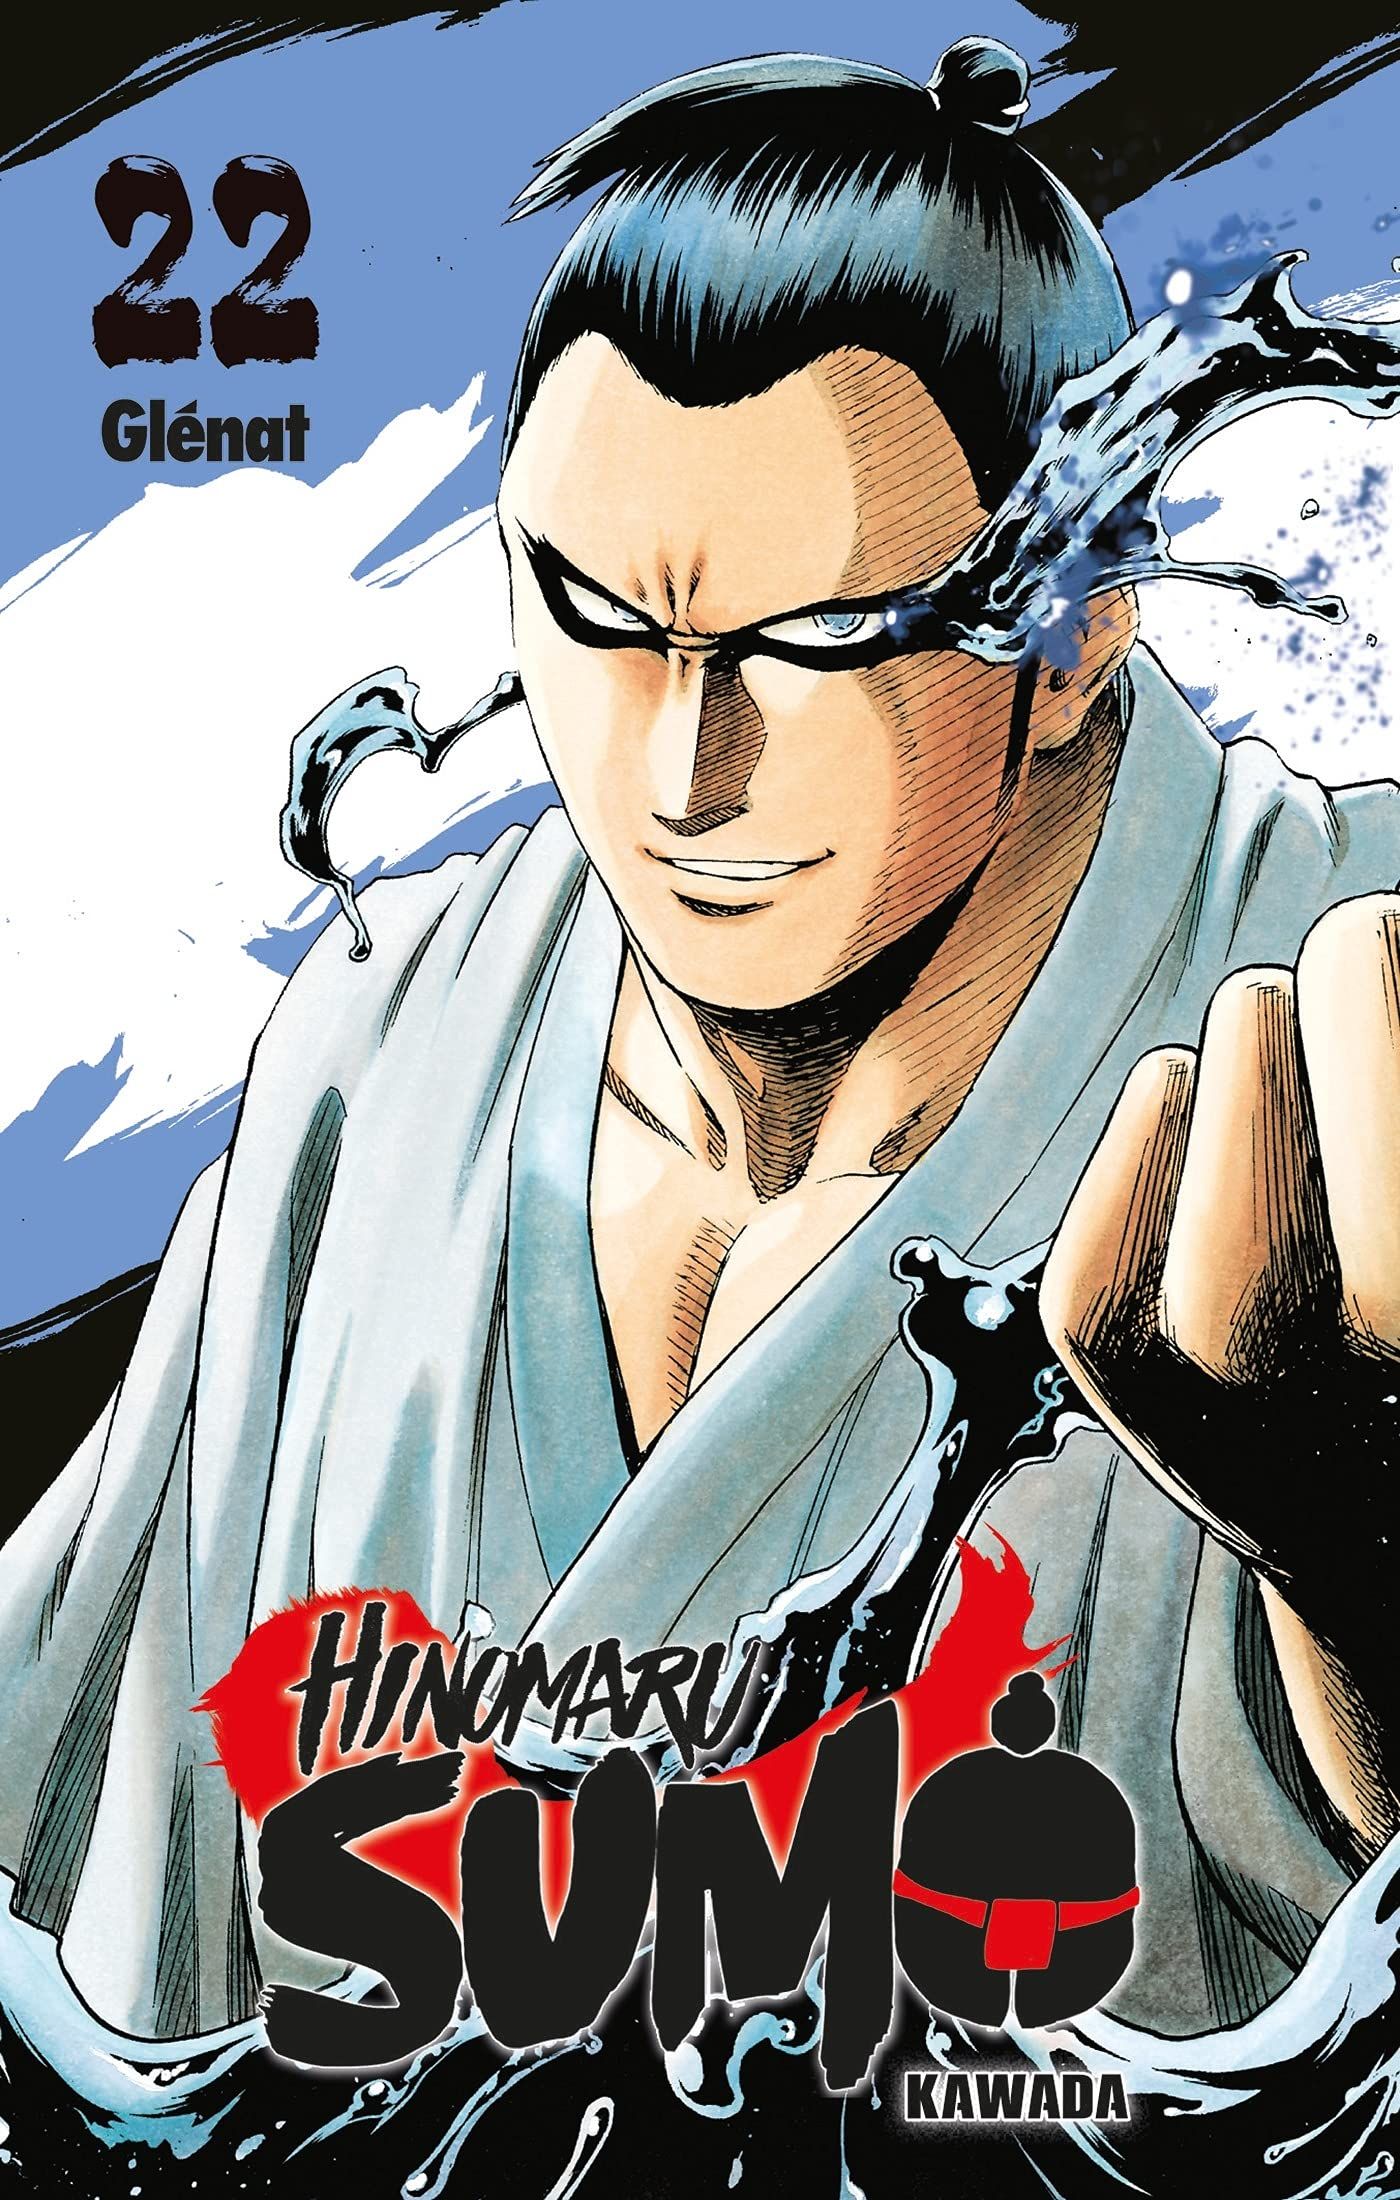 Buy Hinomaru Sumo Vol. 20 Kawada Hinomaru Sumo from Japan - Buy